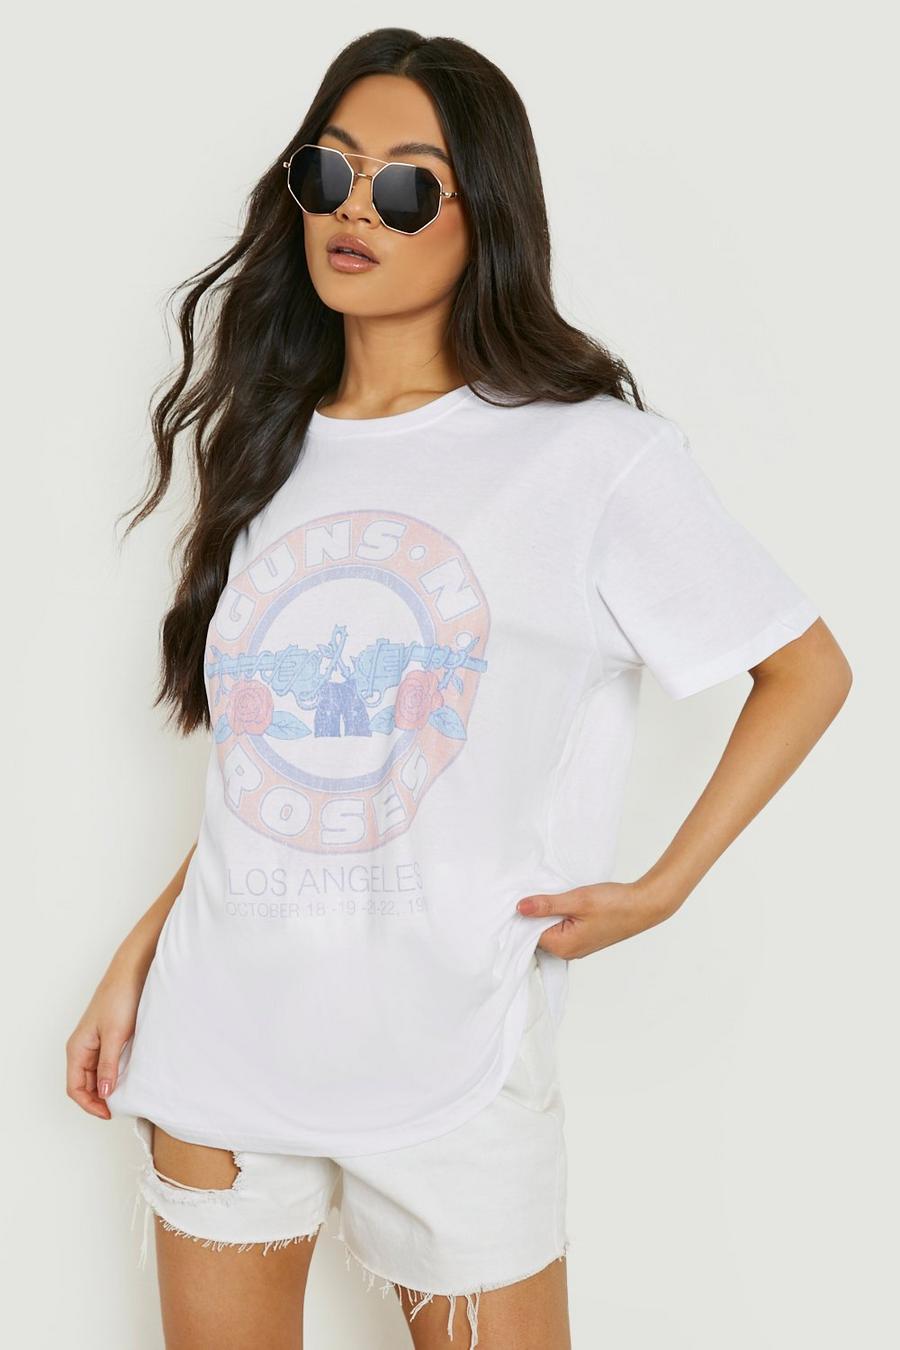 T-shirt oversize ufficiale Guns N Roses, White blanco